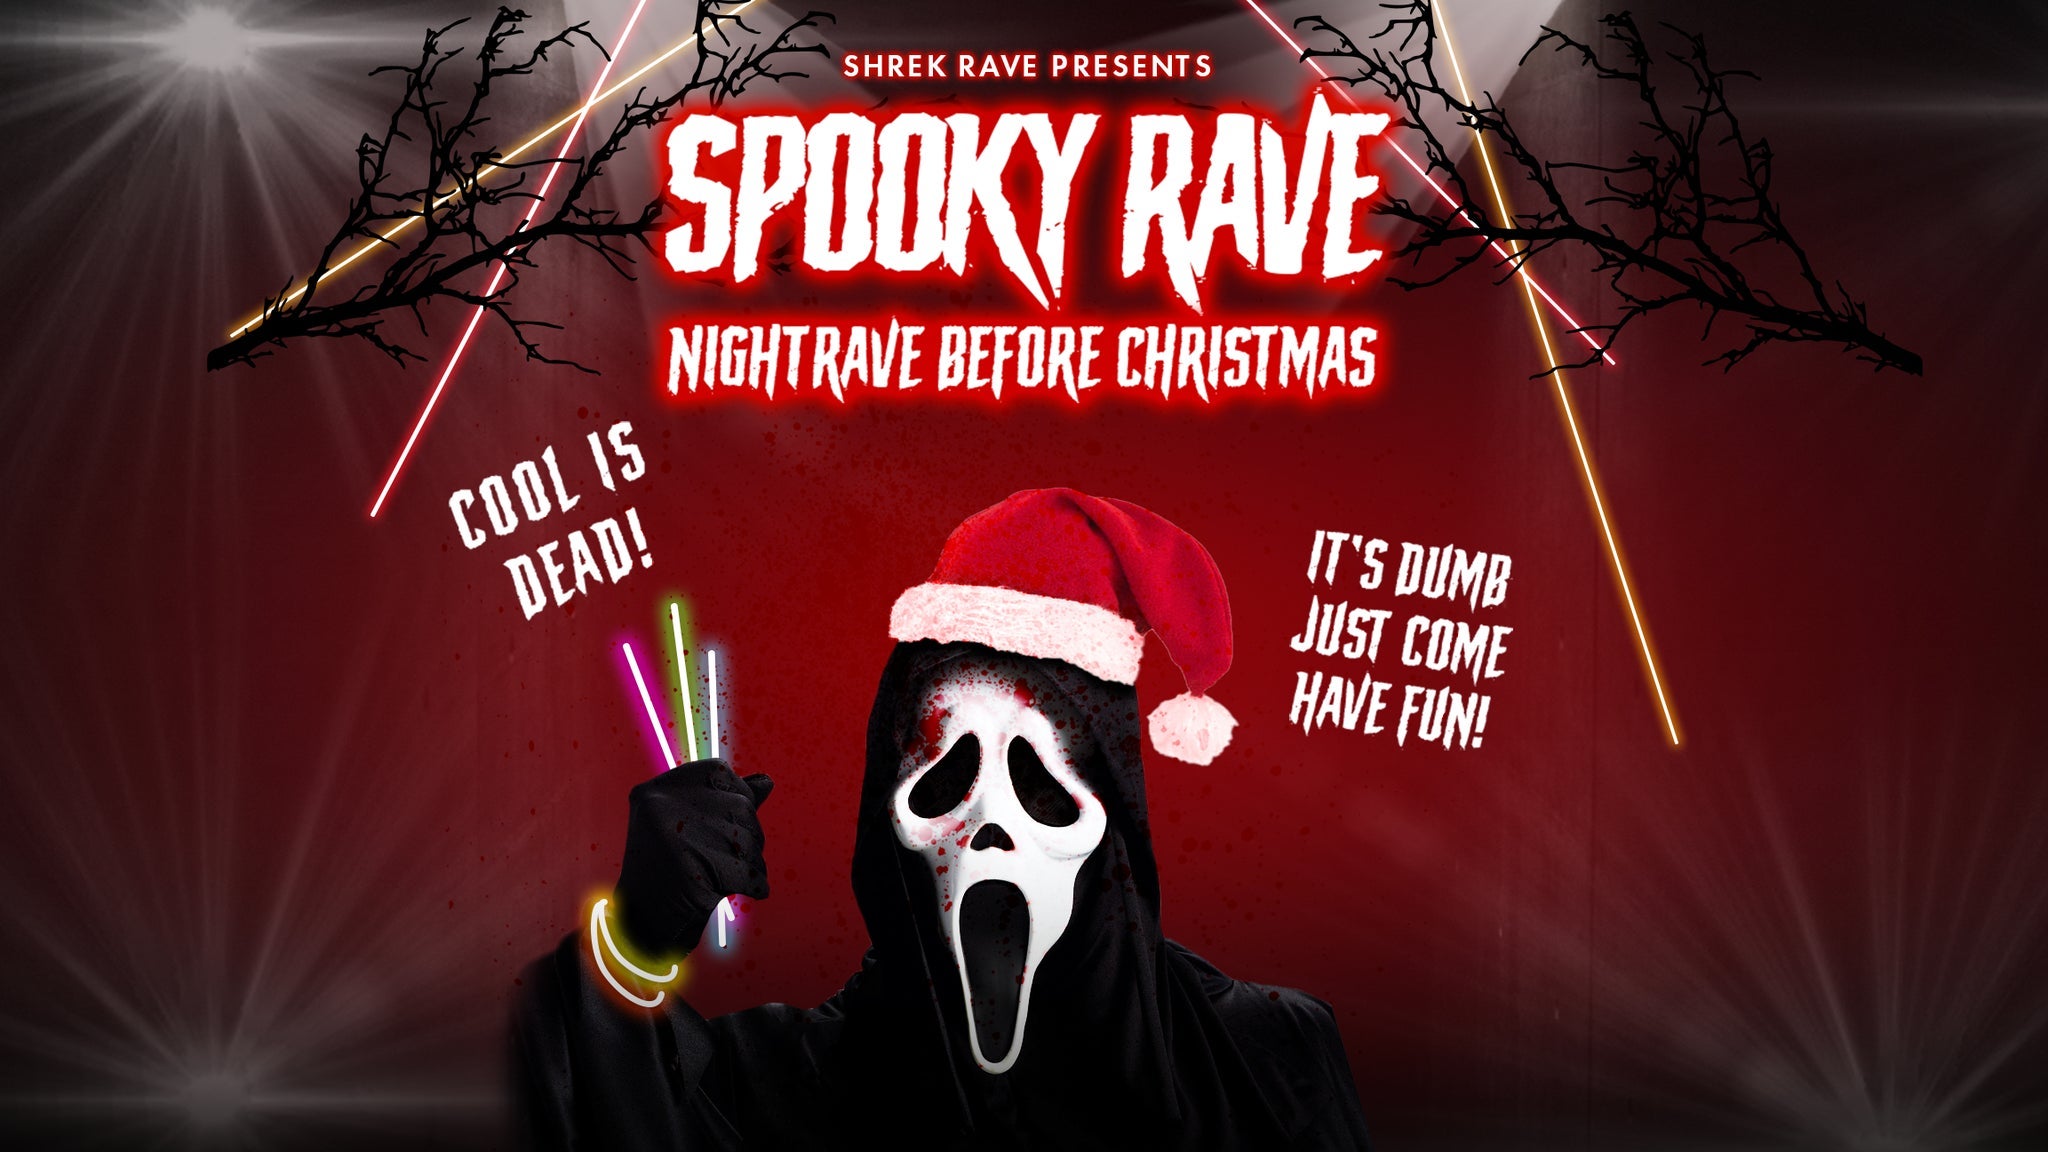 Shrek Rave presents - Spooky Rave - Fright before xmas